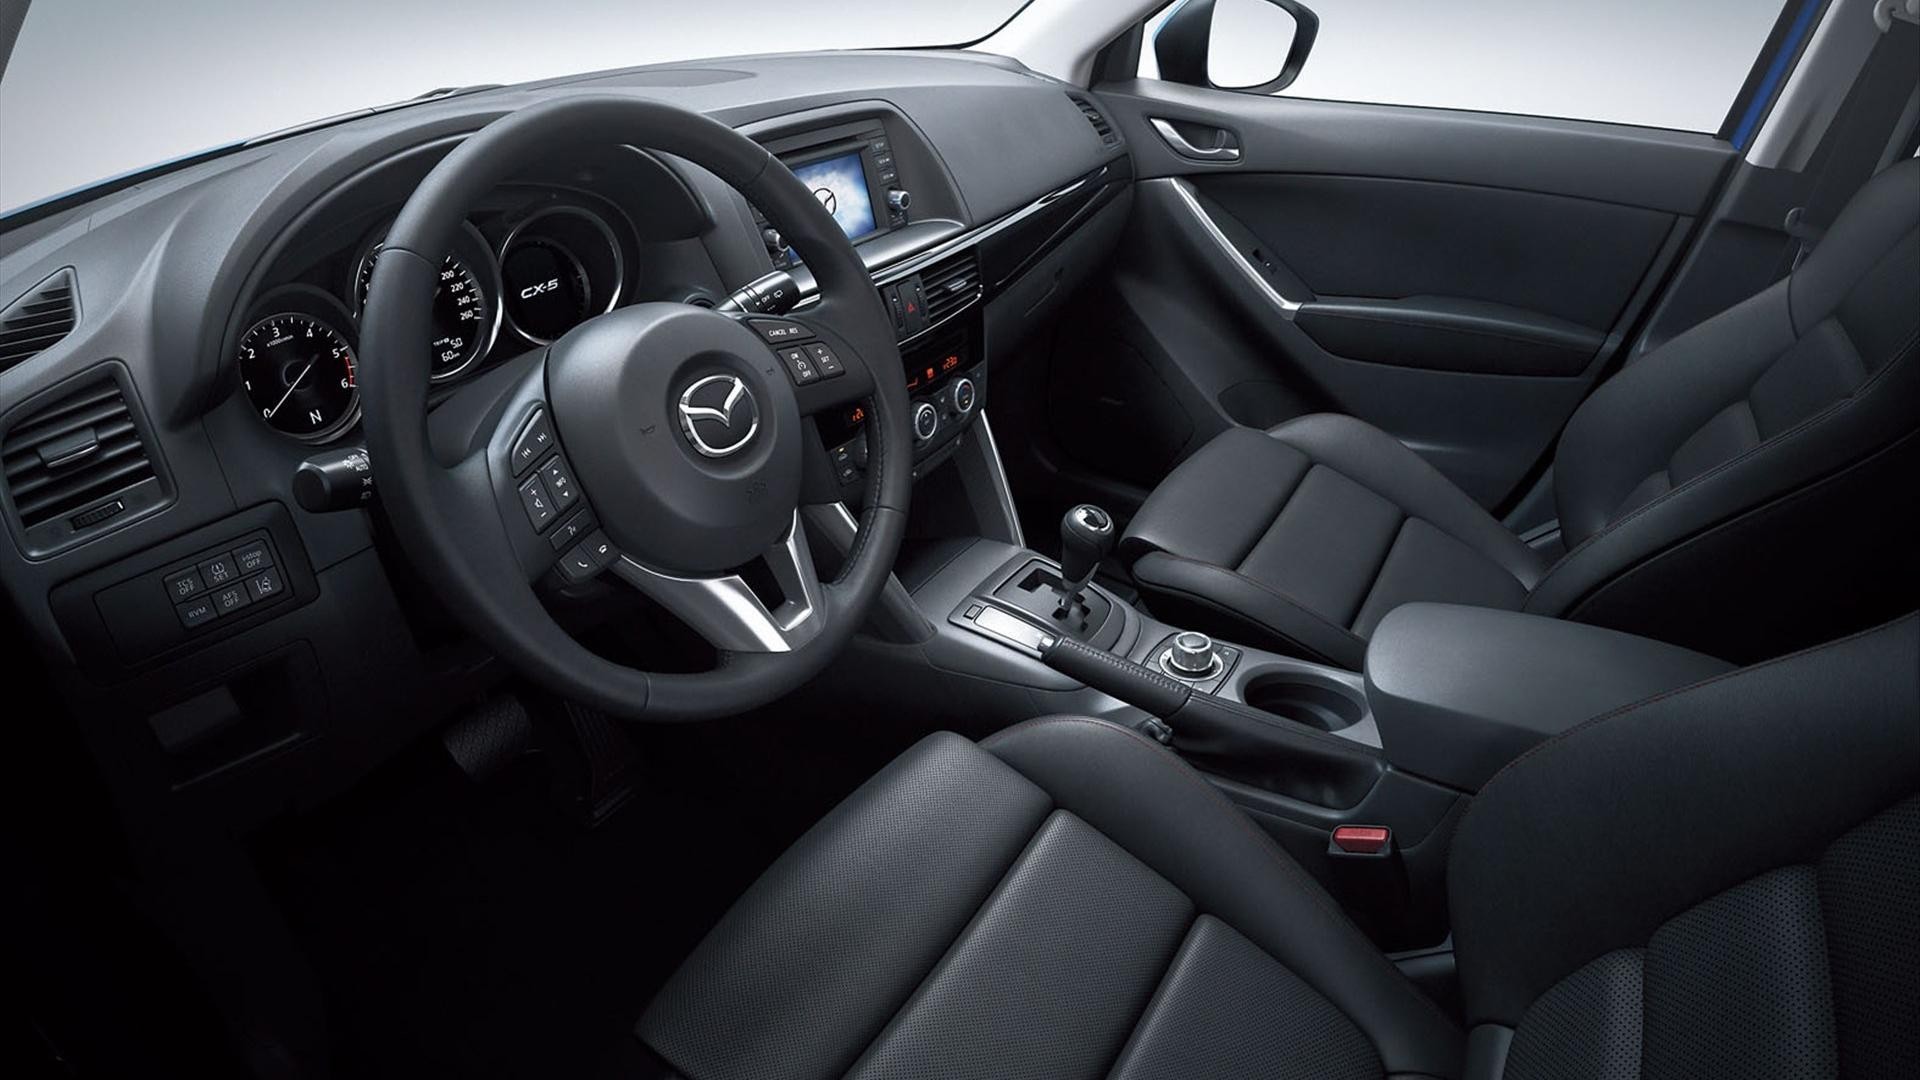 General 1920x1080 car Mazda car interior steering wheel vehicle